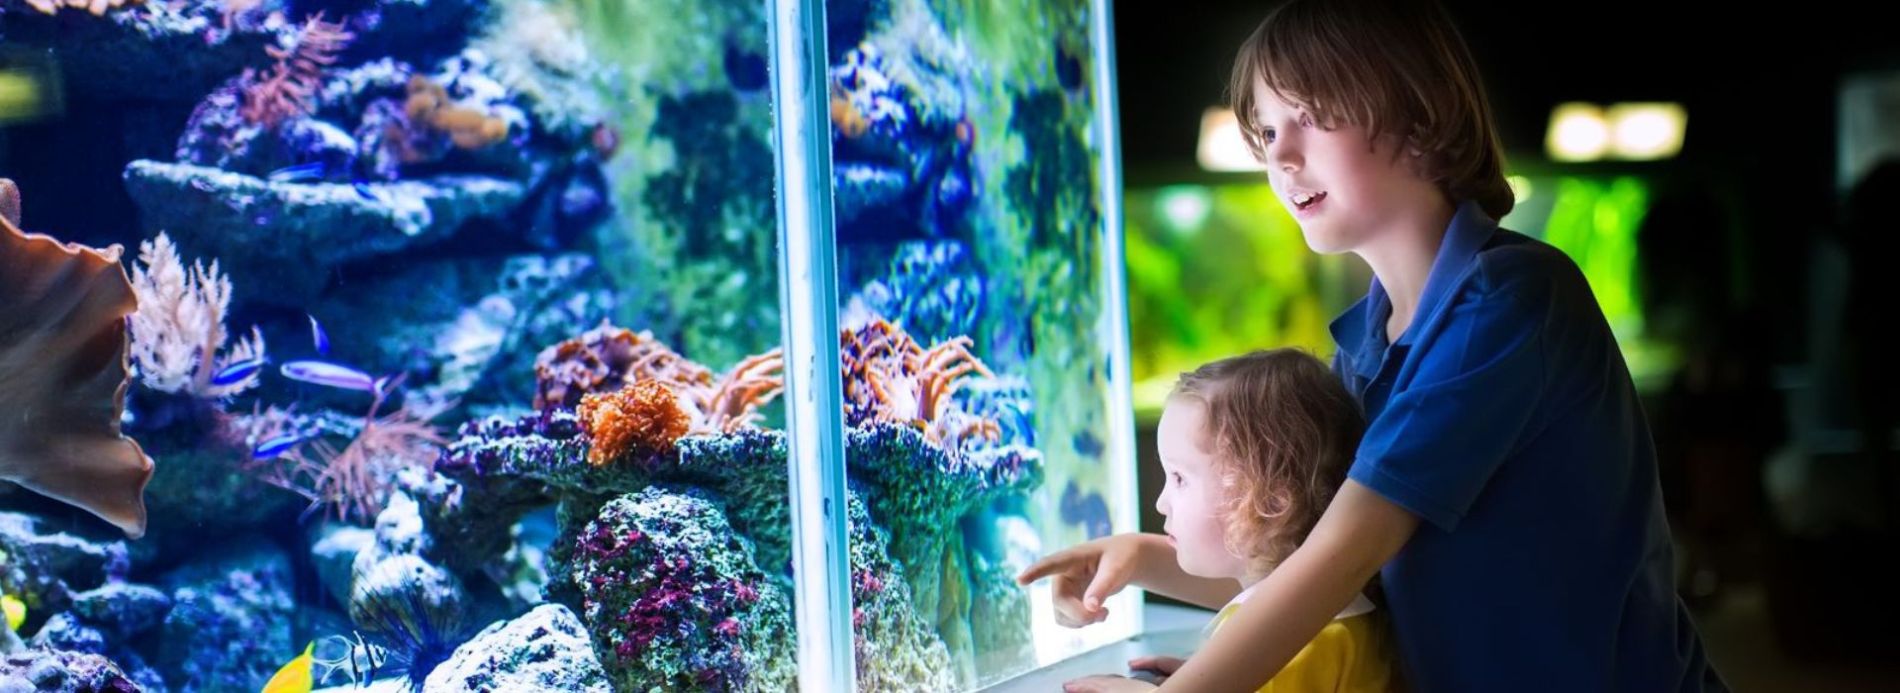 Take a Day Trip to The Florida Aquarium Feature Image